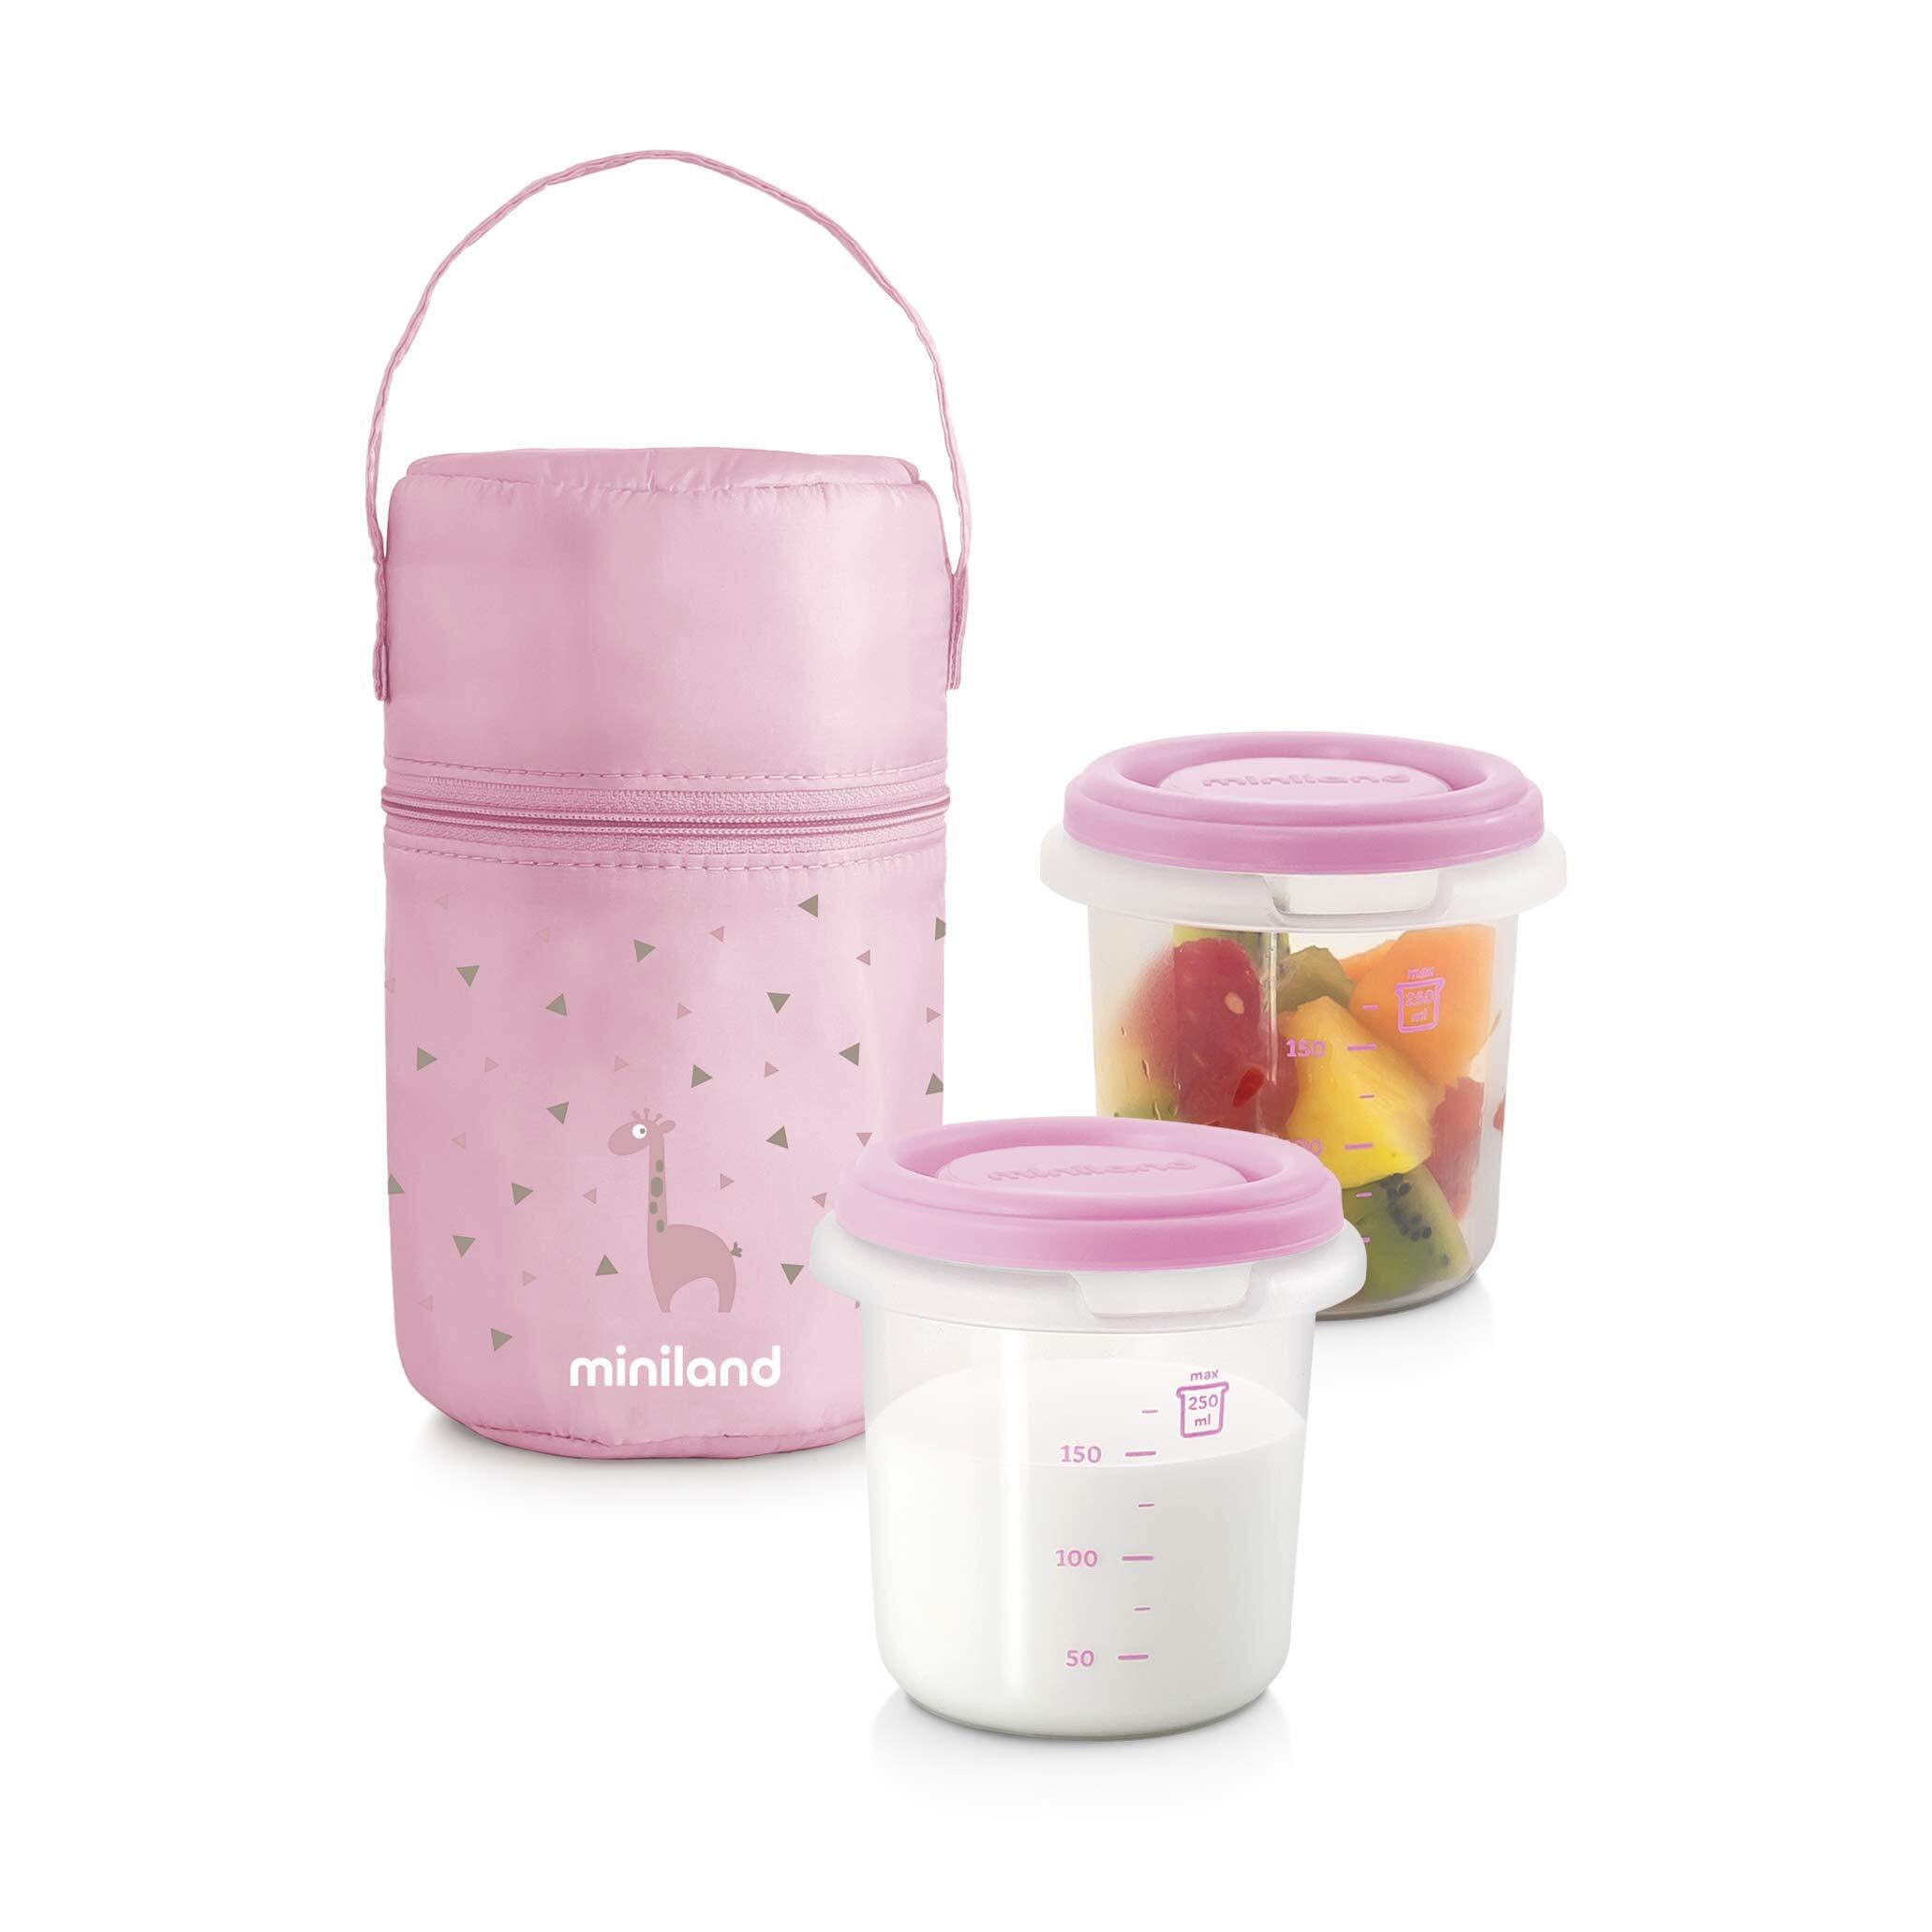 Miniland pack-2-go hermisized Voedingsbakje met opwarmzakje pink